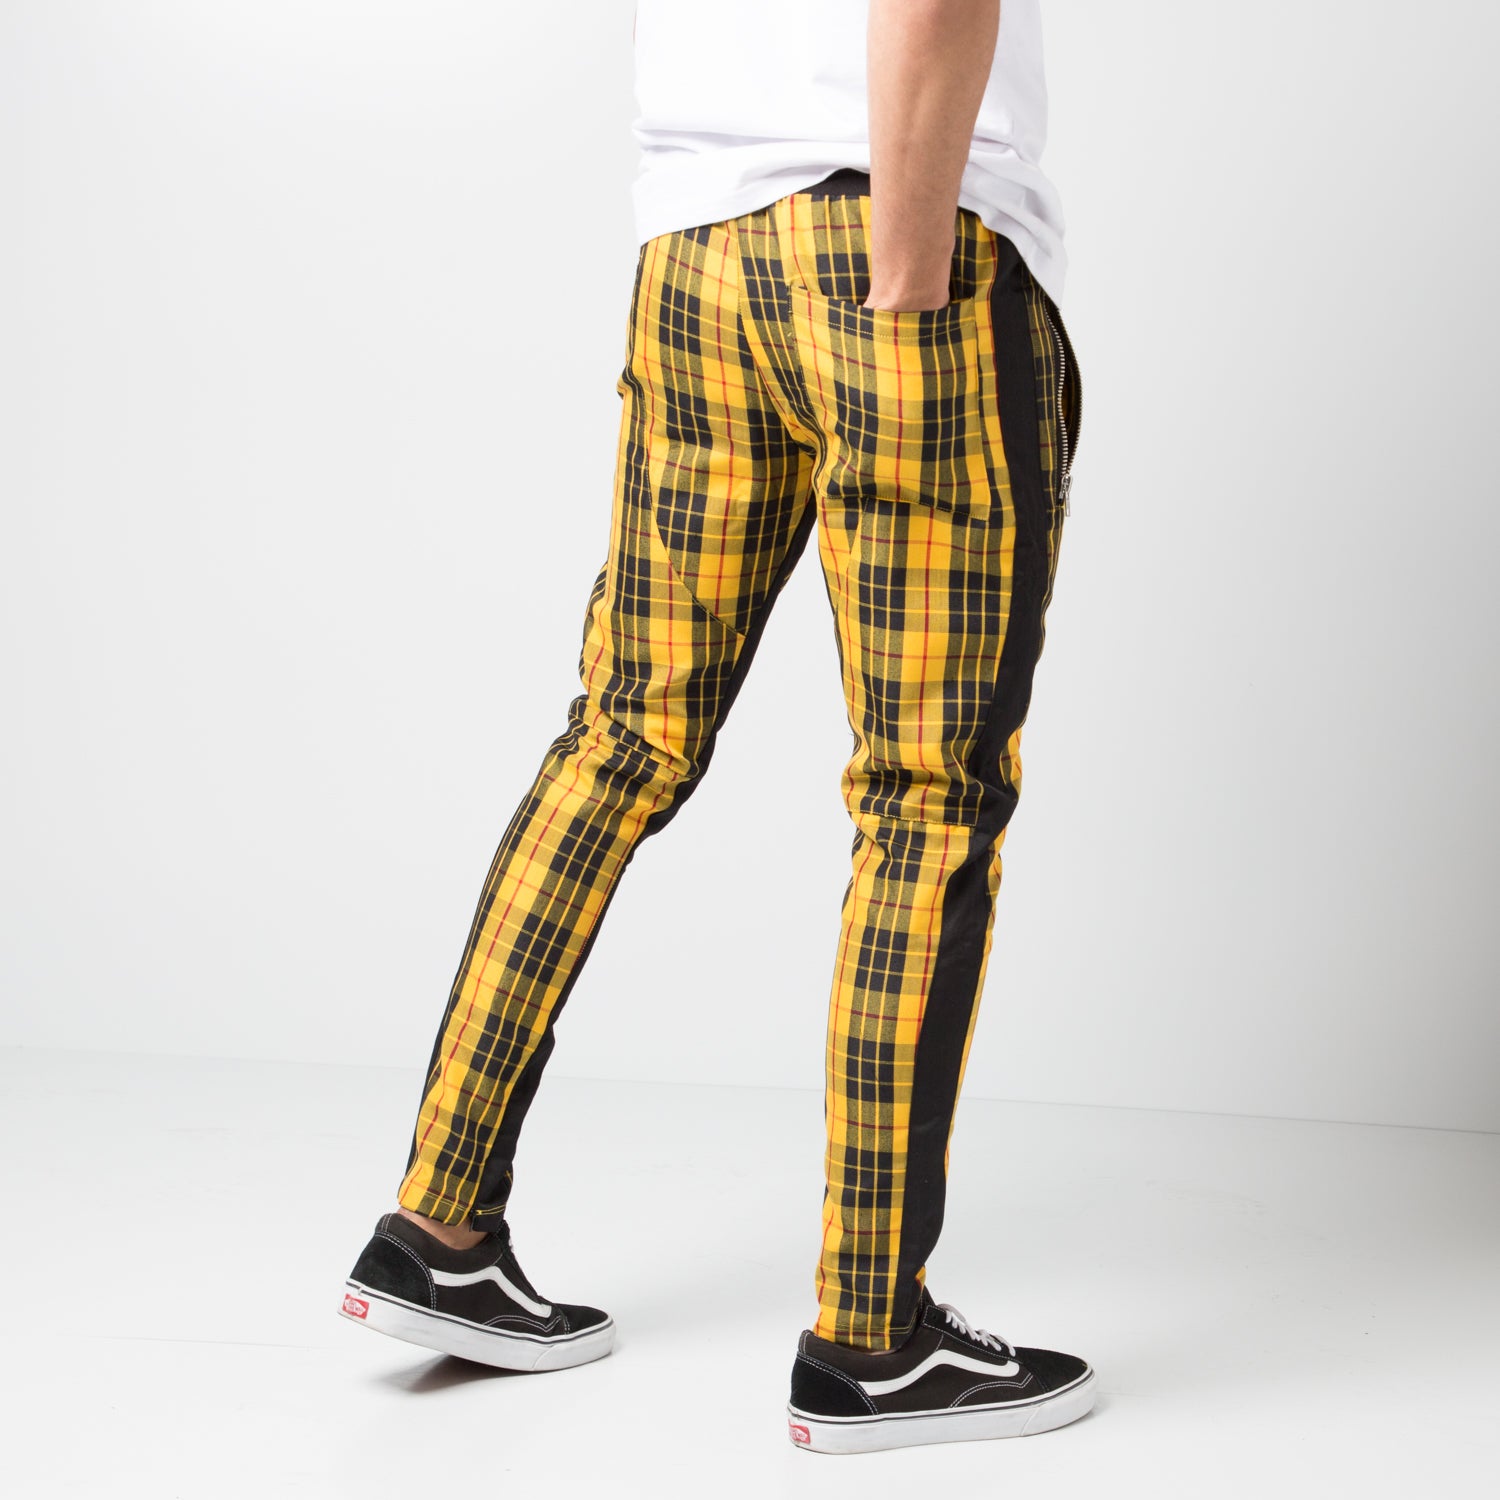 black and yellow tartan trousers